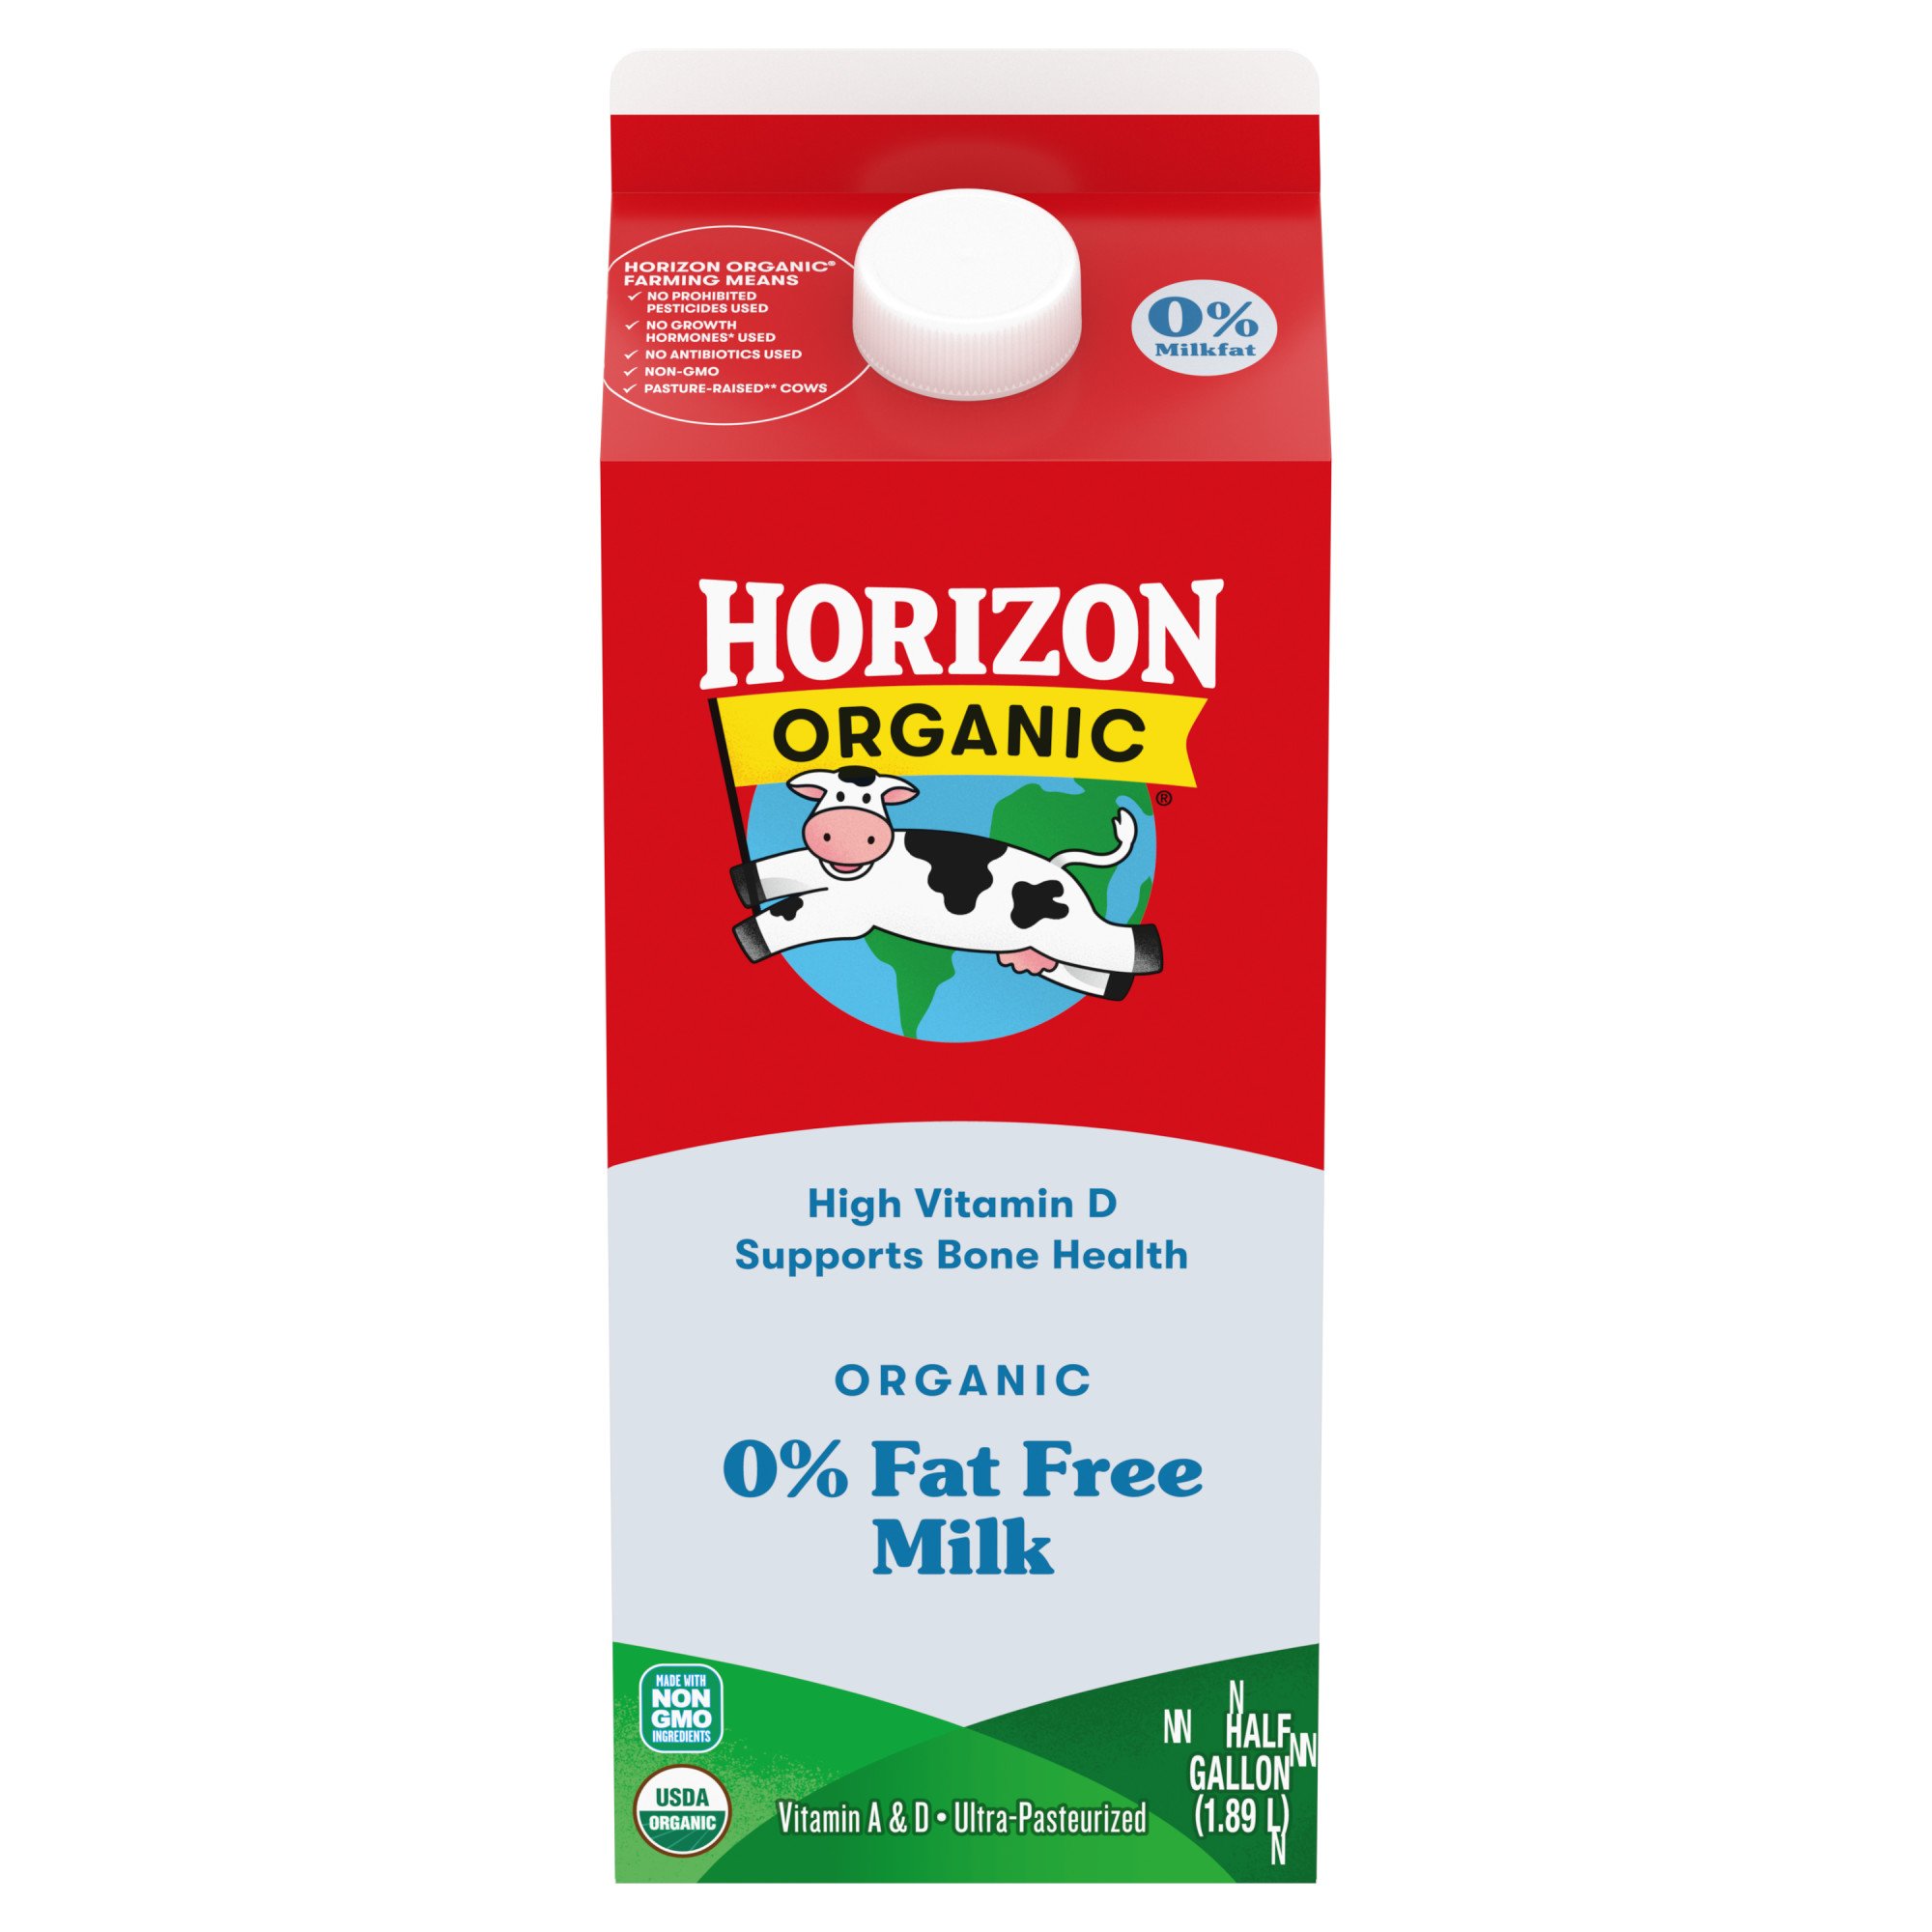 Horizon Organic Fat Free Milk Shop Milk at HEB